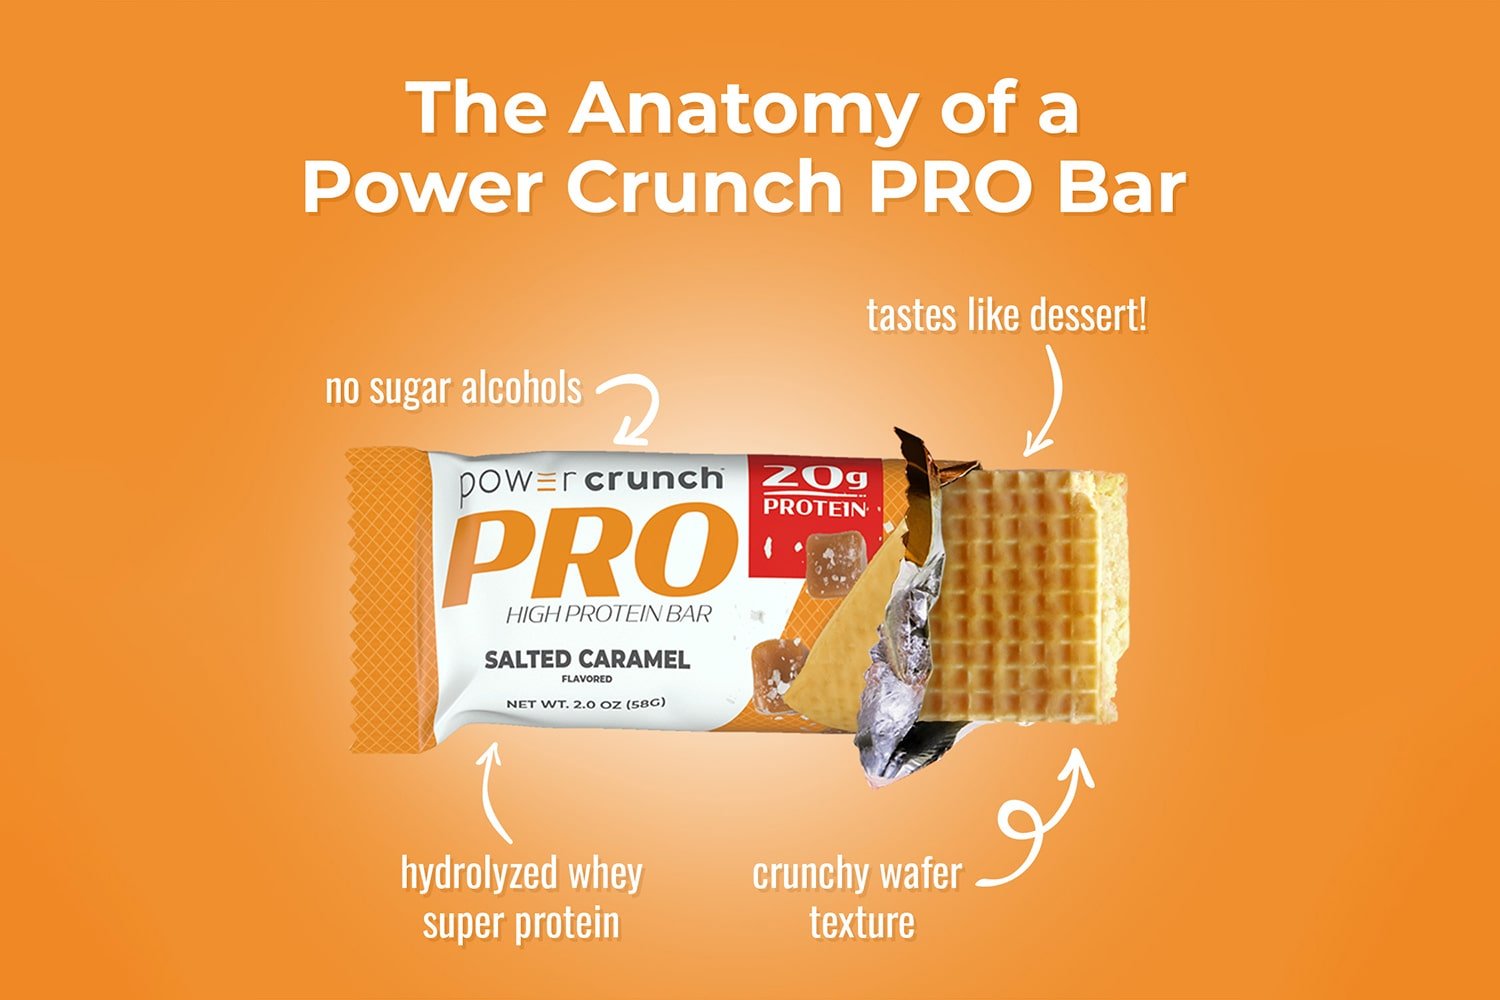 Anatomy of a Power Crunch PRO Salted Caramel bar with hydrolyzed whey protein, crunchy wafers